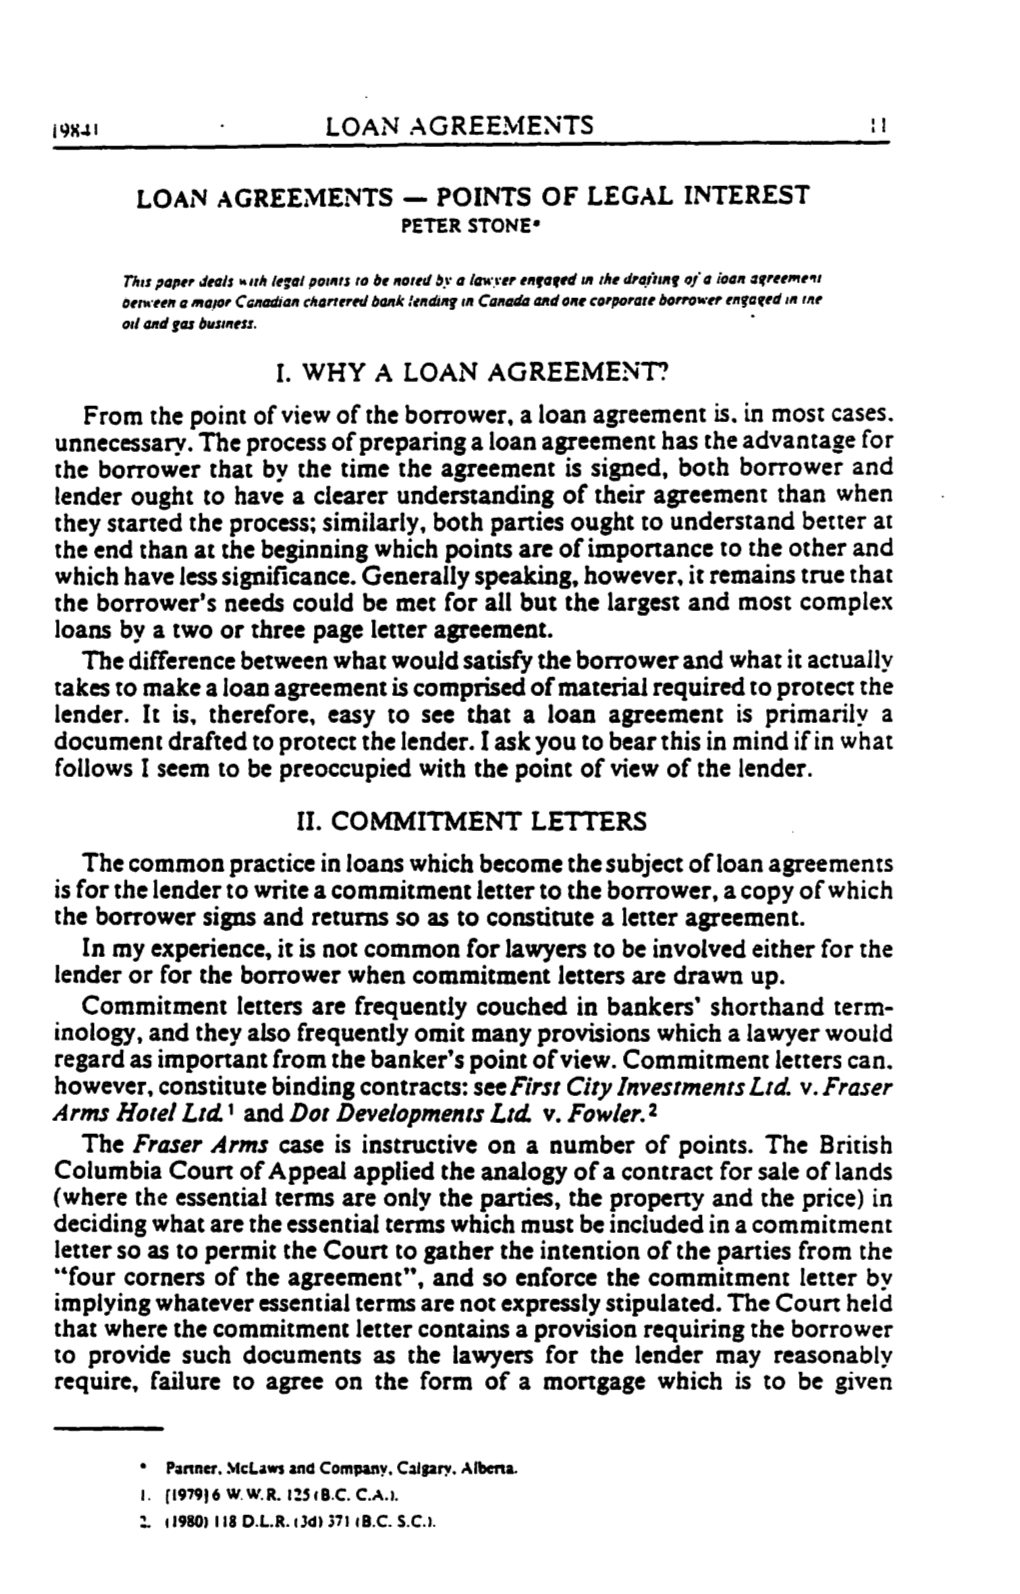 Loan Agreements I. Why a Loan Agreement?